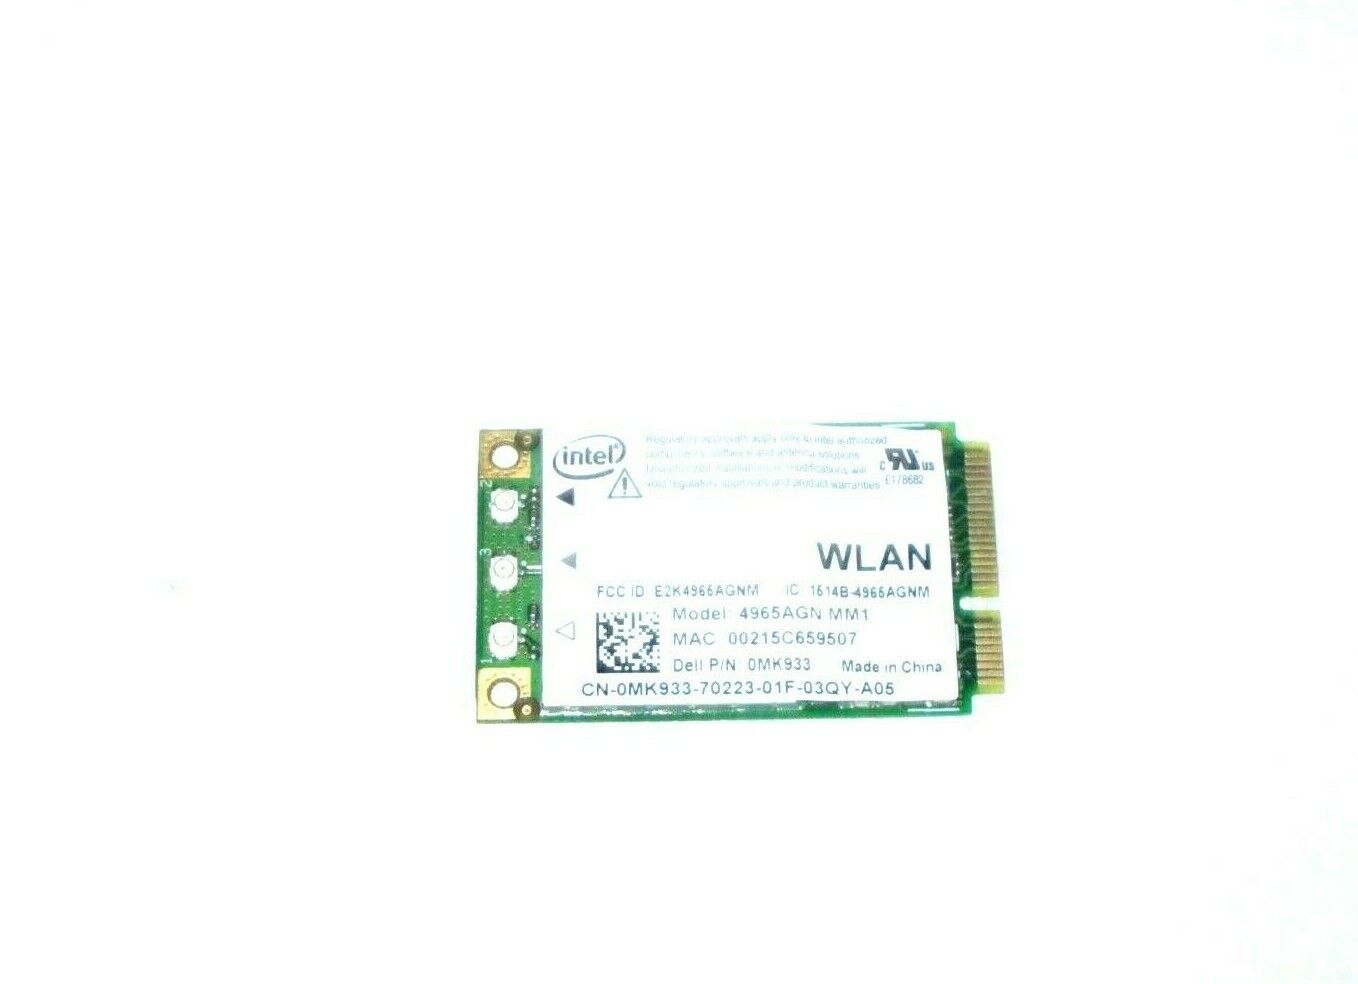 NEW Intel Pro Wireless Wifi 4965AGN 802.11 a/b/g/n MiniCard - MK933